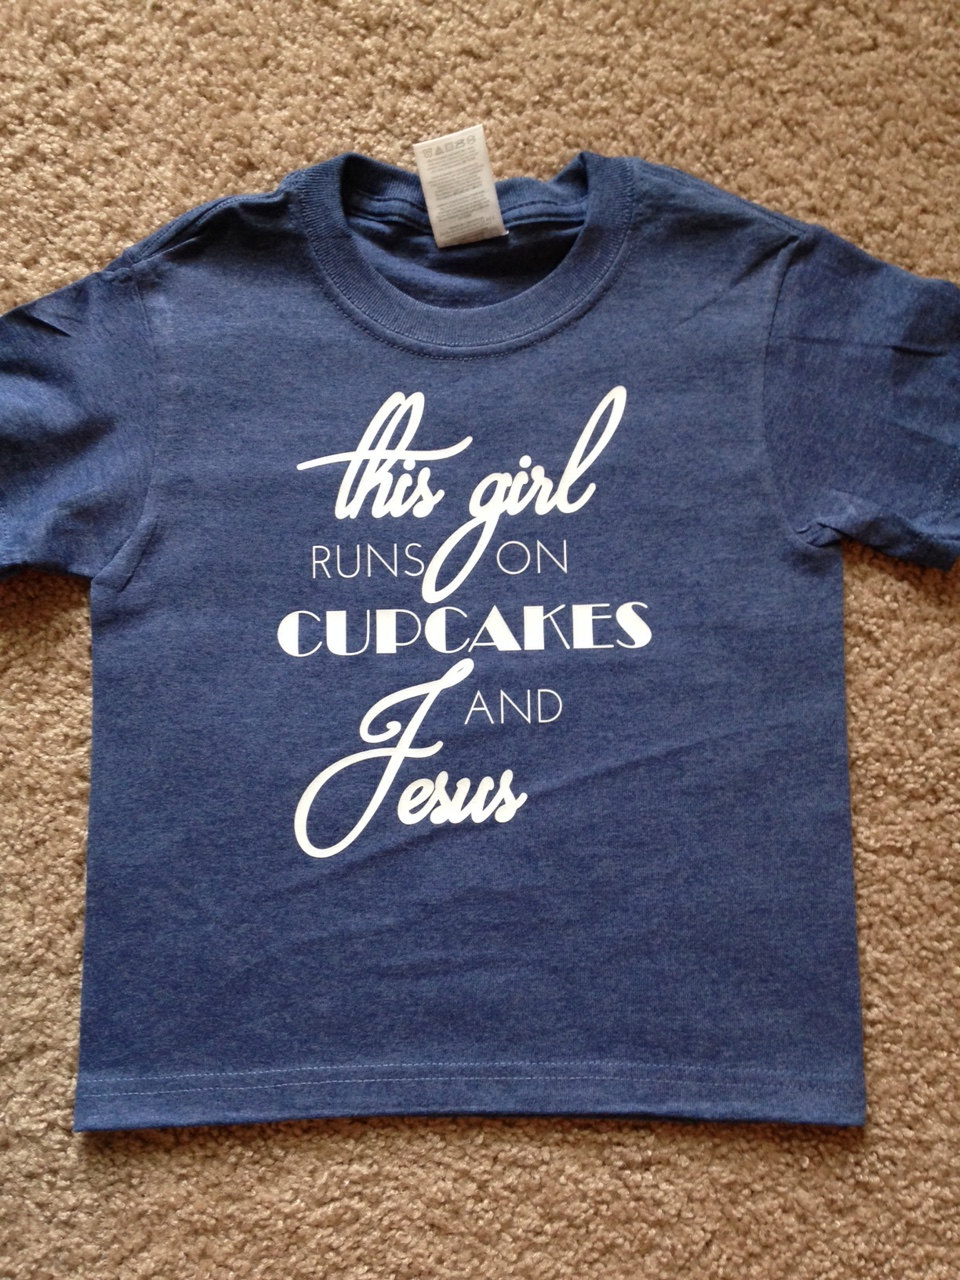 This Girl Runs On Cupcakes and Jesus Shirt